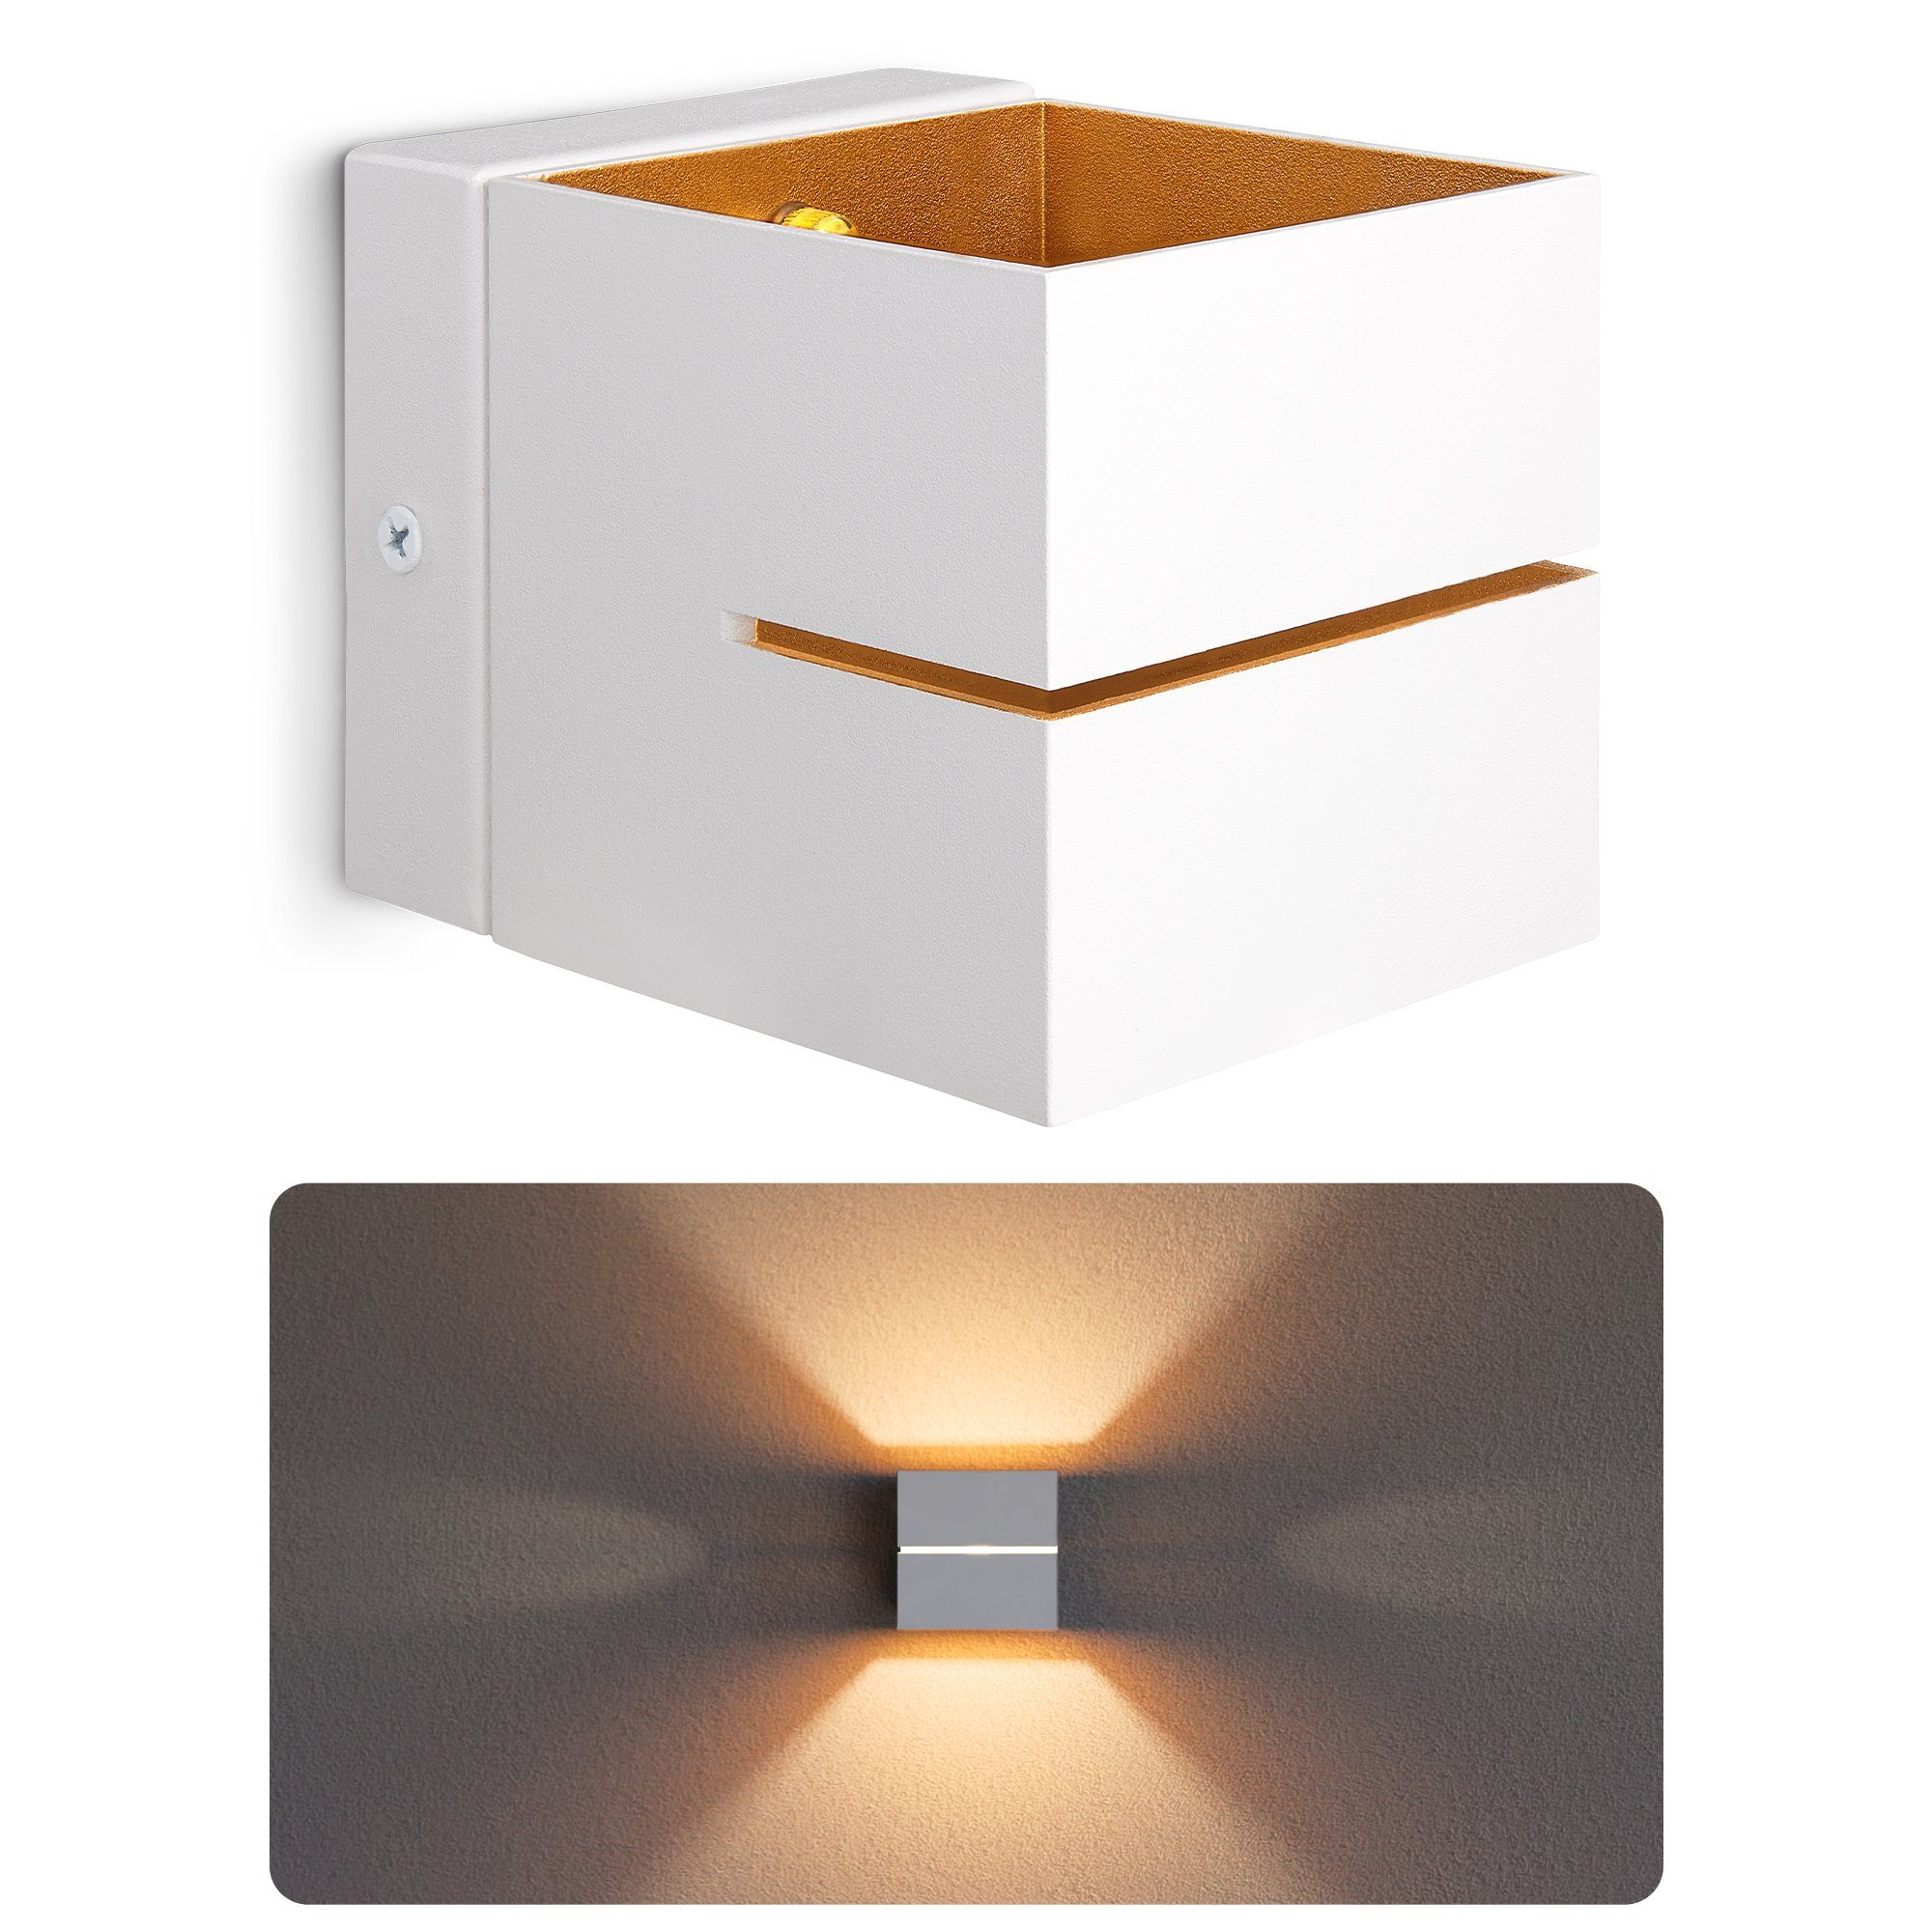 SSC-LUXon LED Wandleuchte KOURA Up Down Wandlampe weiß gold Lichtspalt mit G9 LED 2W, Warmweiß | Wandleuchten